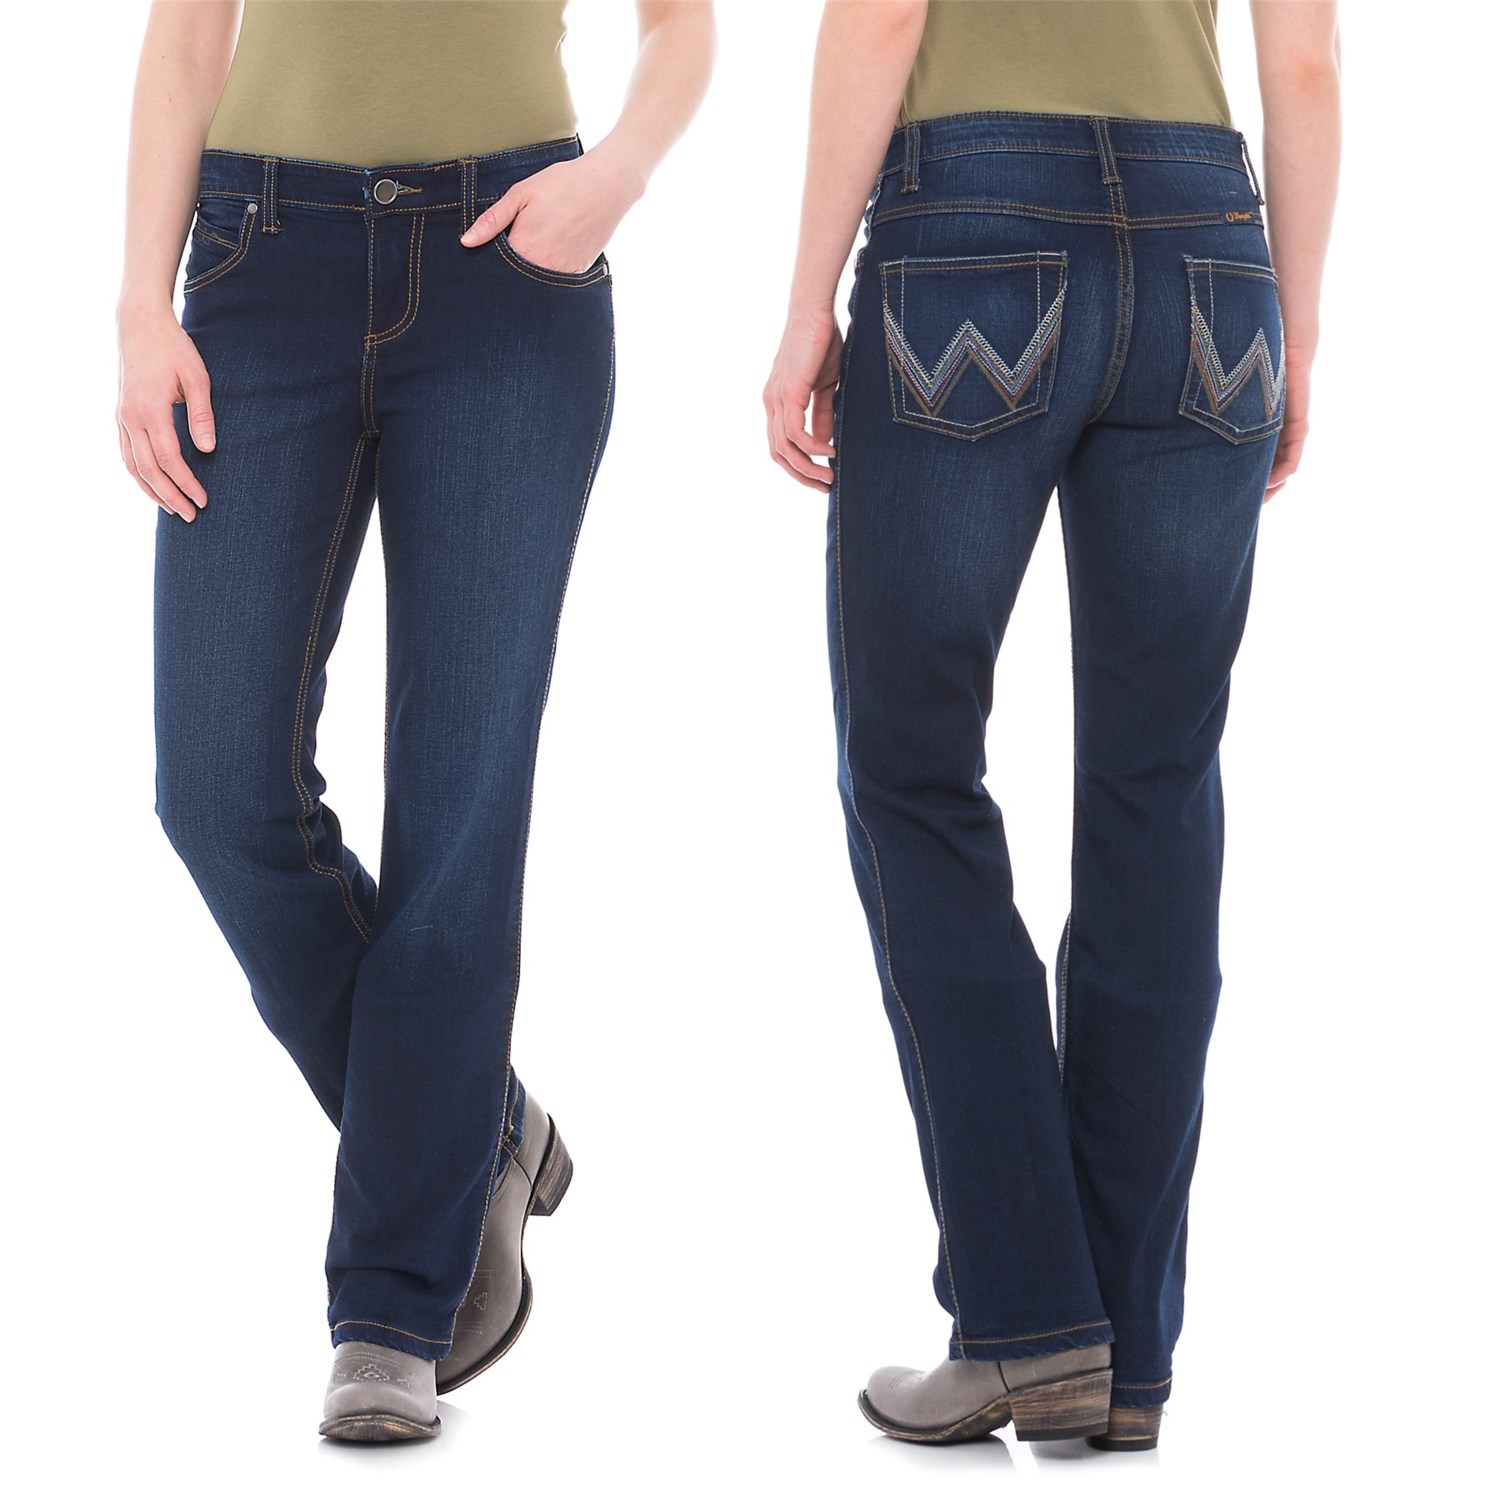 Wrangler Q-Baby Jeans (For Women) - Save 50%